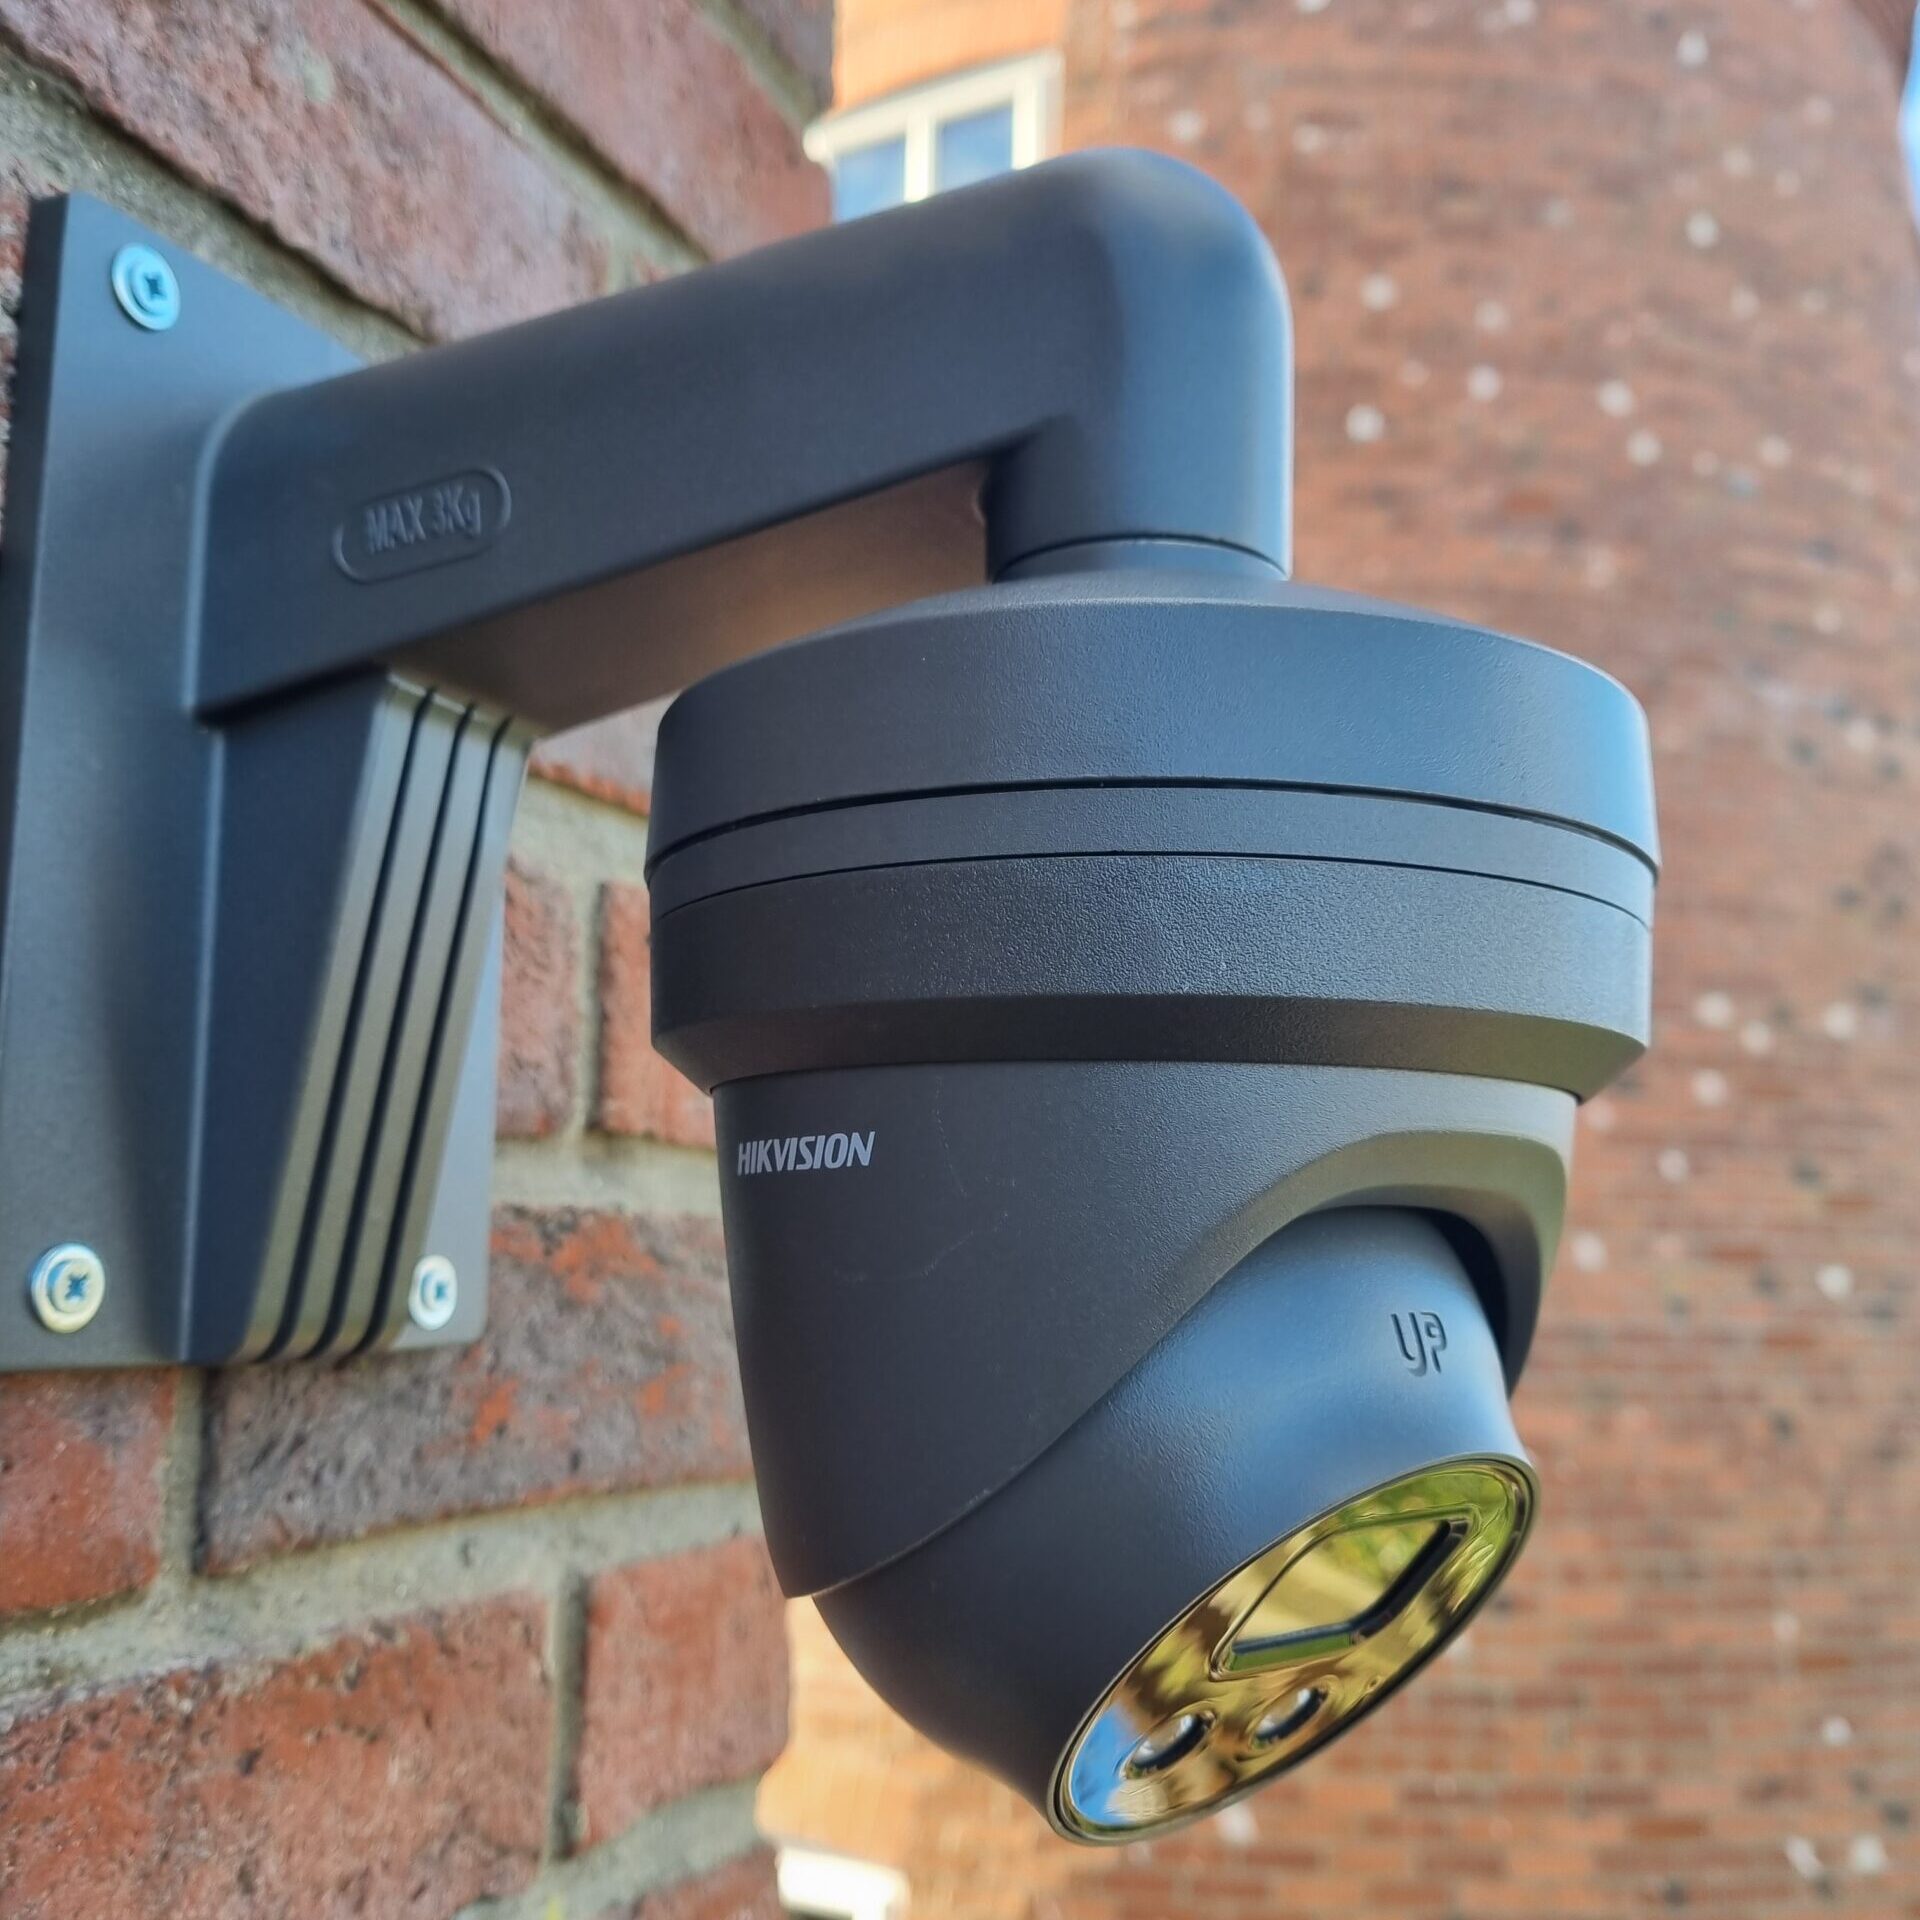 Grey CCTV camera installed on a wall